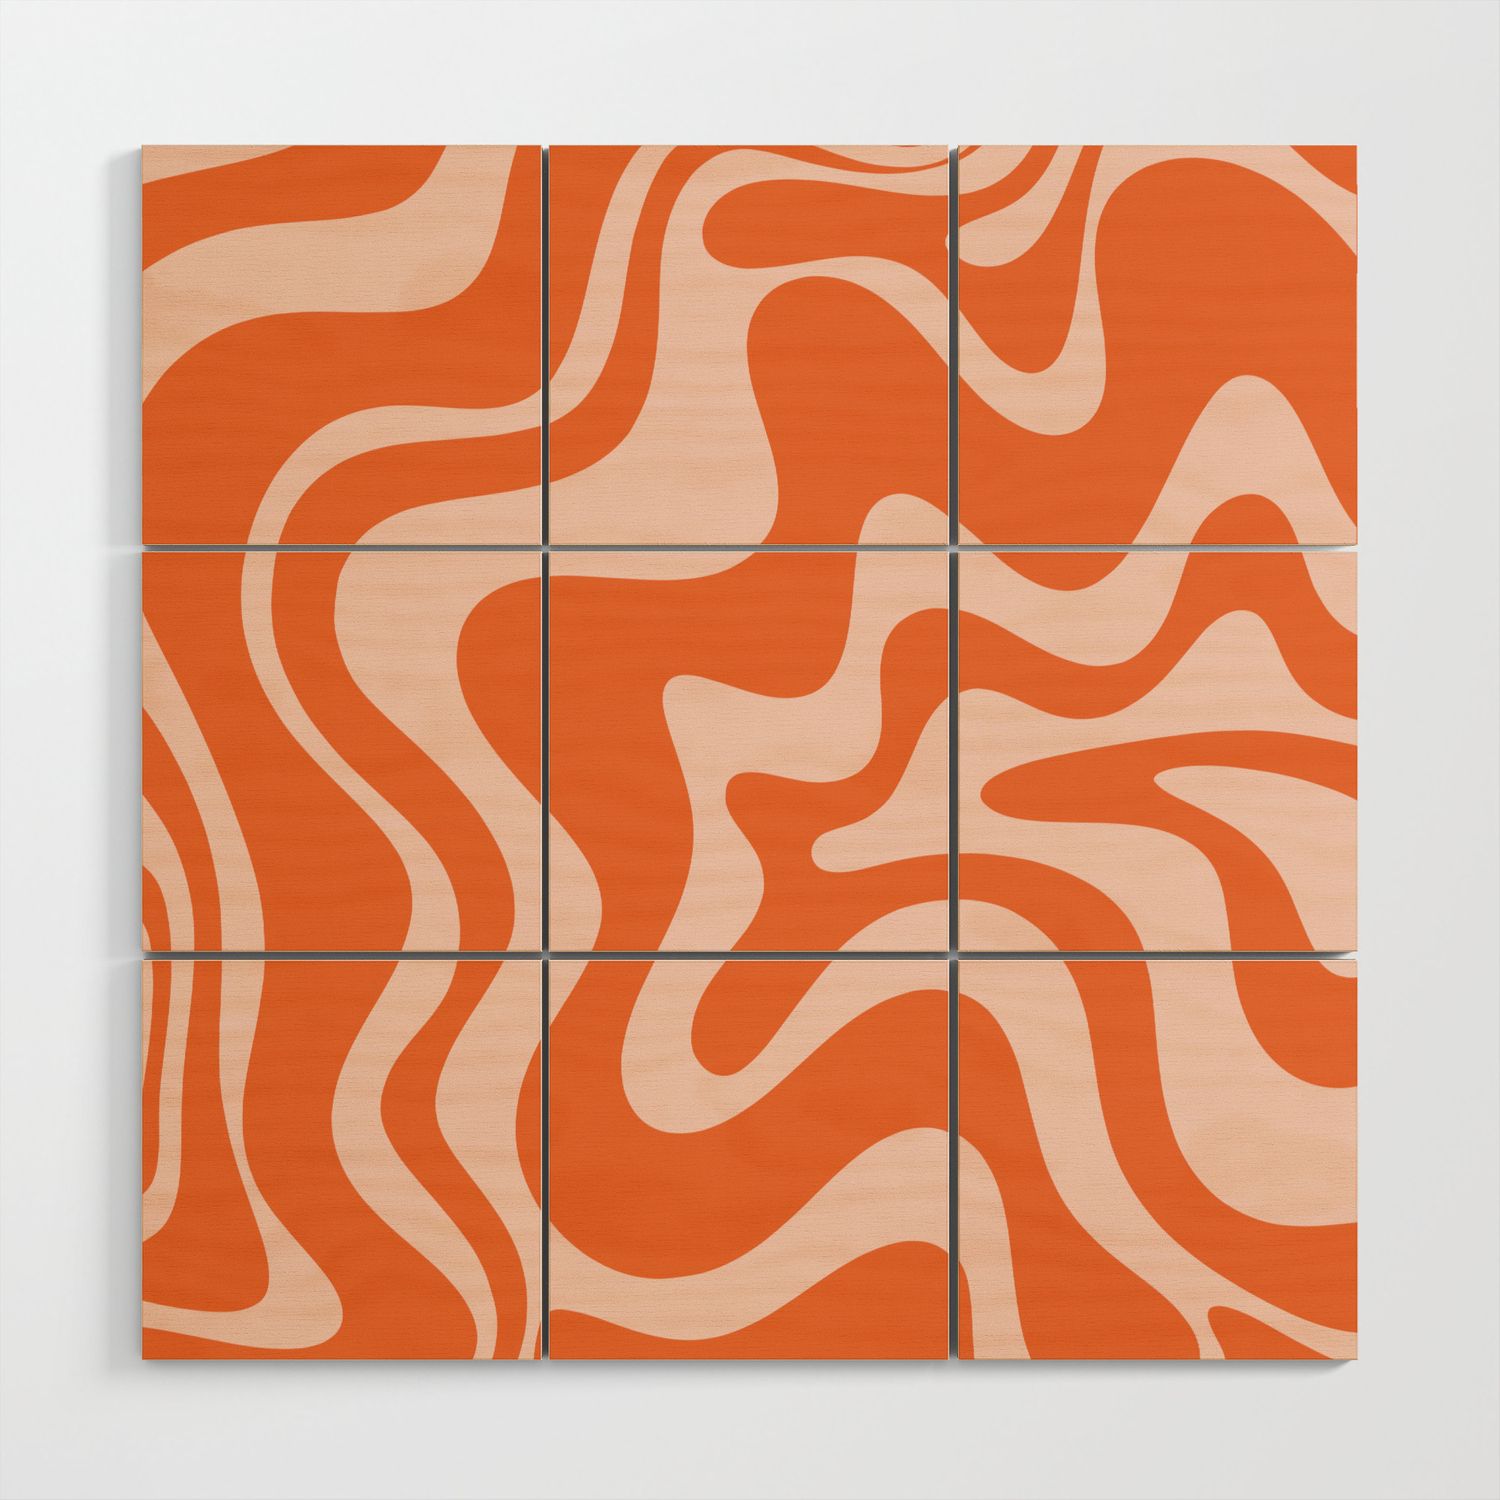 Retro Liquid Swirl Abstract Pattern In Orange And Pale Blush Pink Wood Wall  Artkierkegaard Design Studio | Society6 Pertaining To Liquid Swirl Wall Art (View 2 of 15)